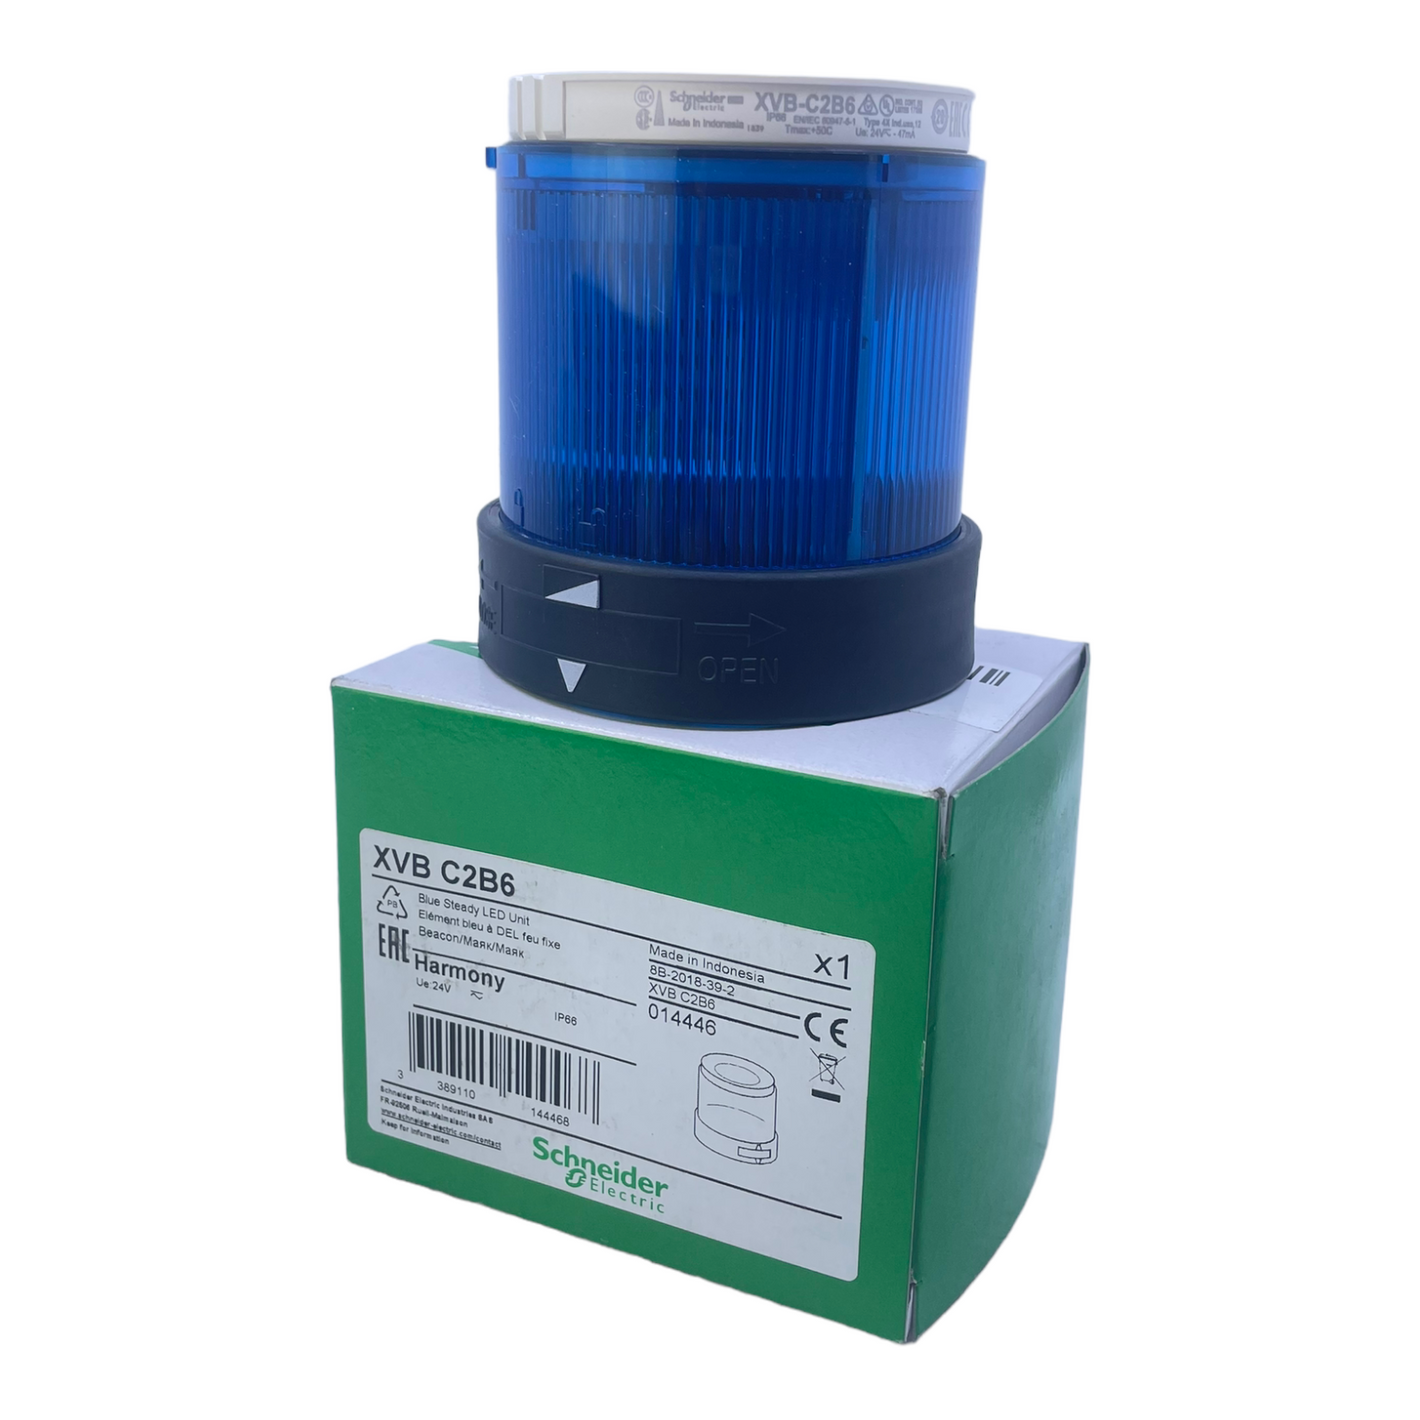 Schneider Electric XVBC2B6 Blue light element for industrial use 24V